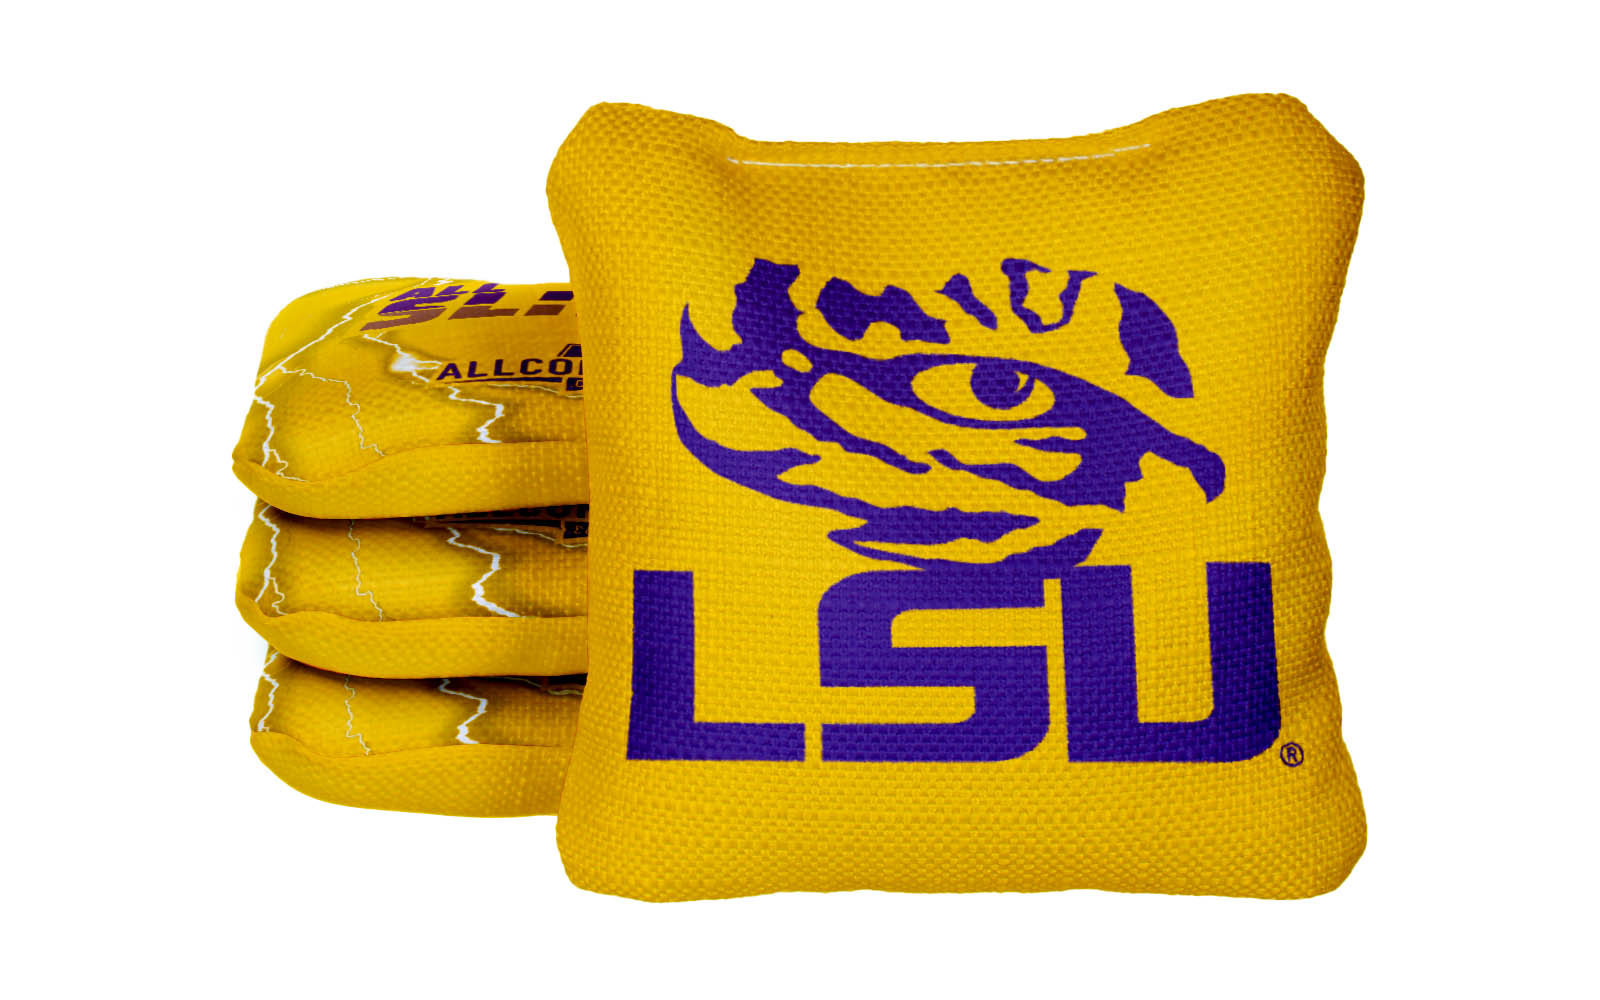 Officially Licensed Collegiate Cornhole Bags - All-Slide 2.0 - Set of 4 - Louisiana State University